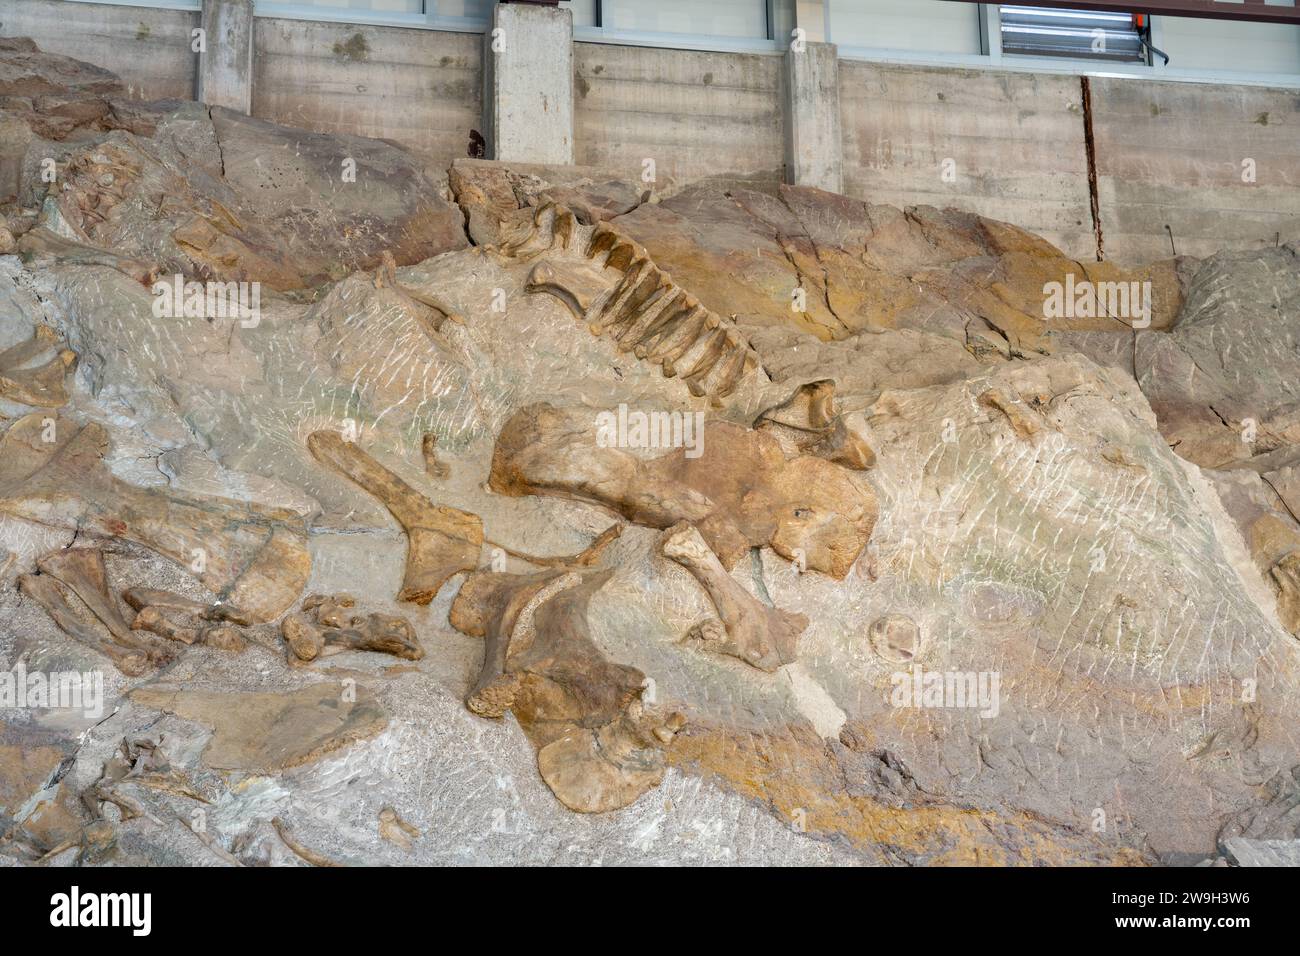 Partially-excavated sauropod dinosaur bones on the Wall of Bones in the Quarry Exhibit Hall, Dinosaur National Monument, Utah. Stock Photo